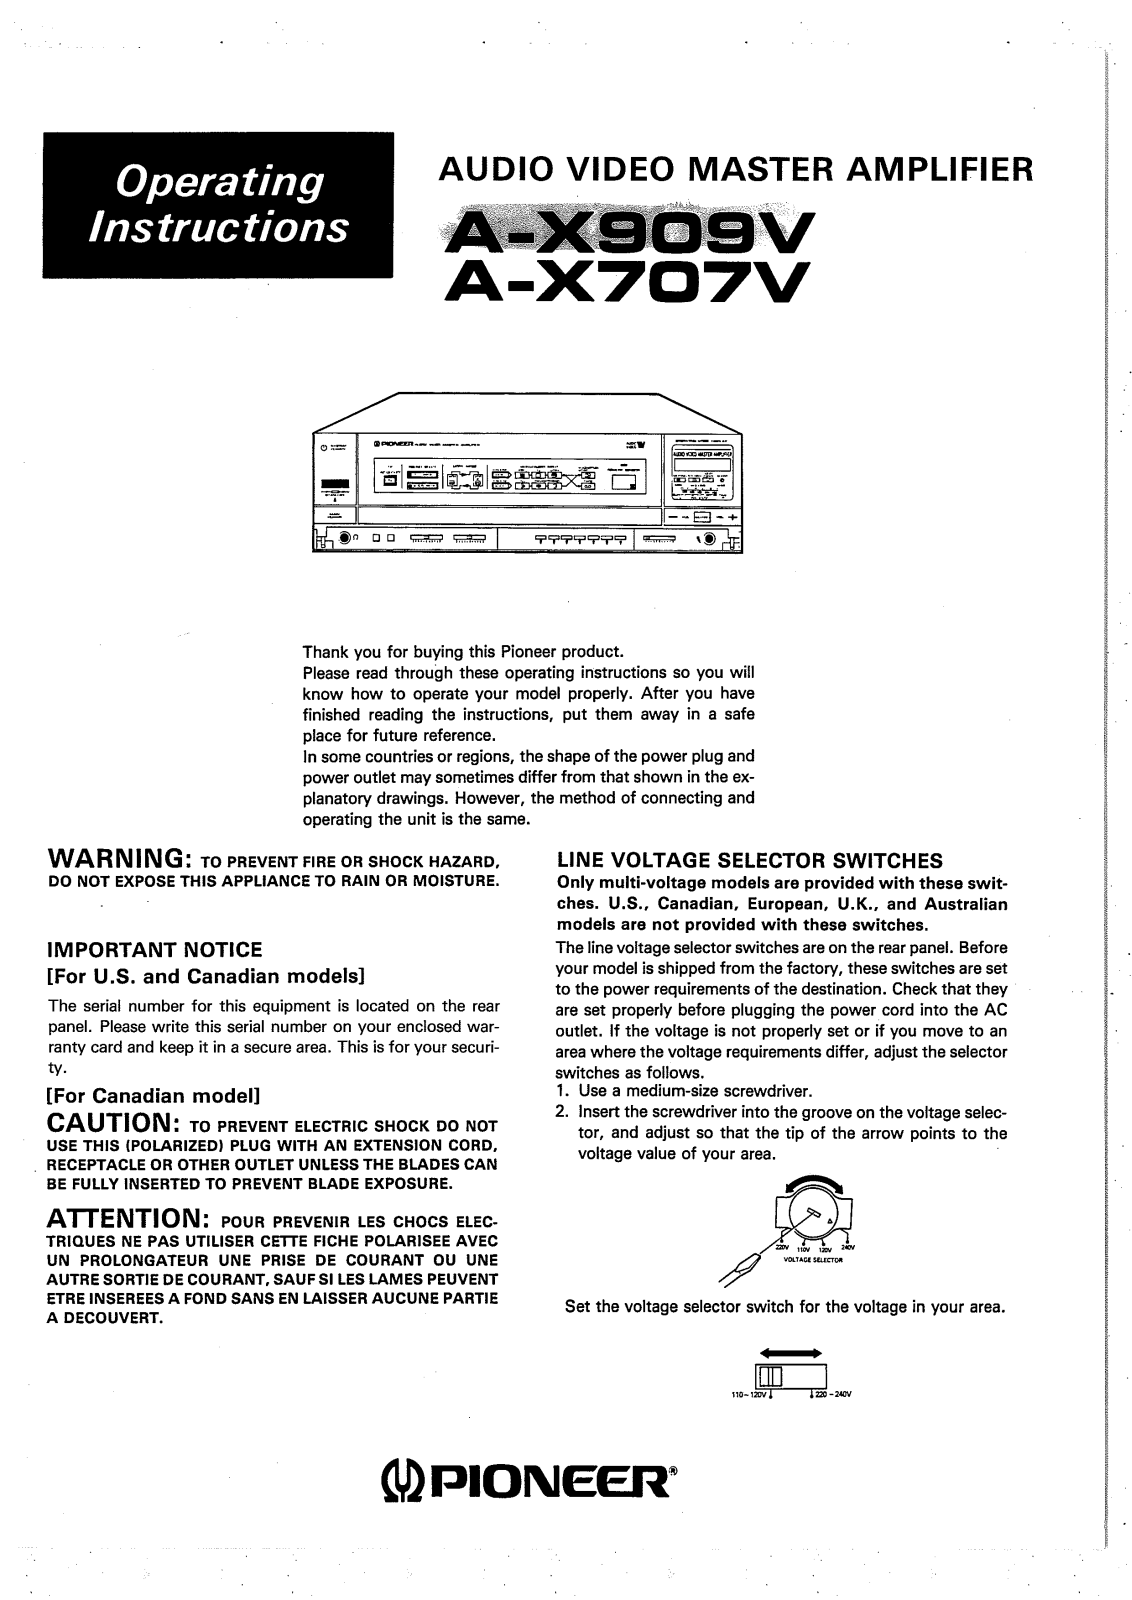 Pioneer A-X909V, A-X707V Manual